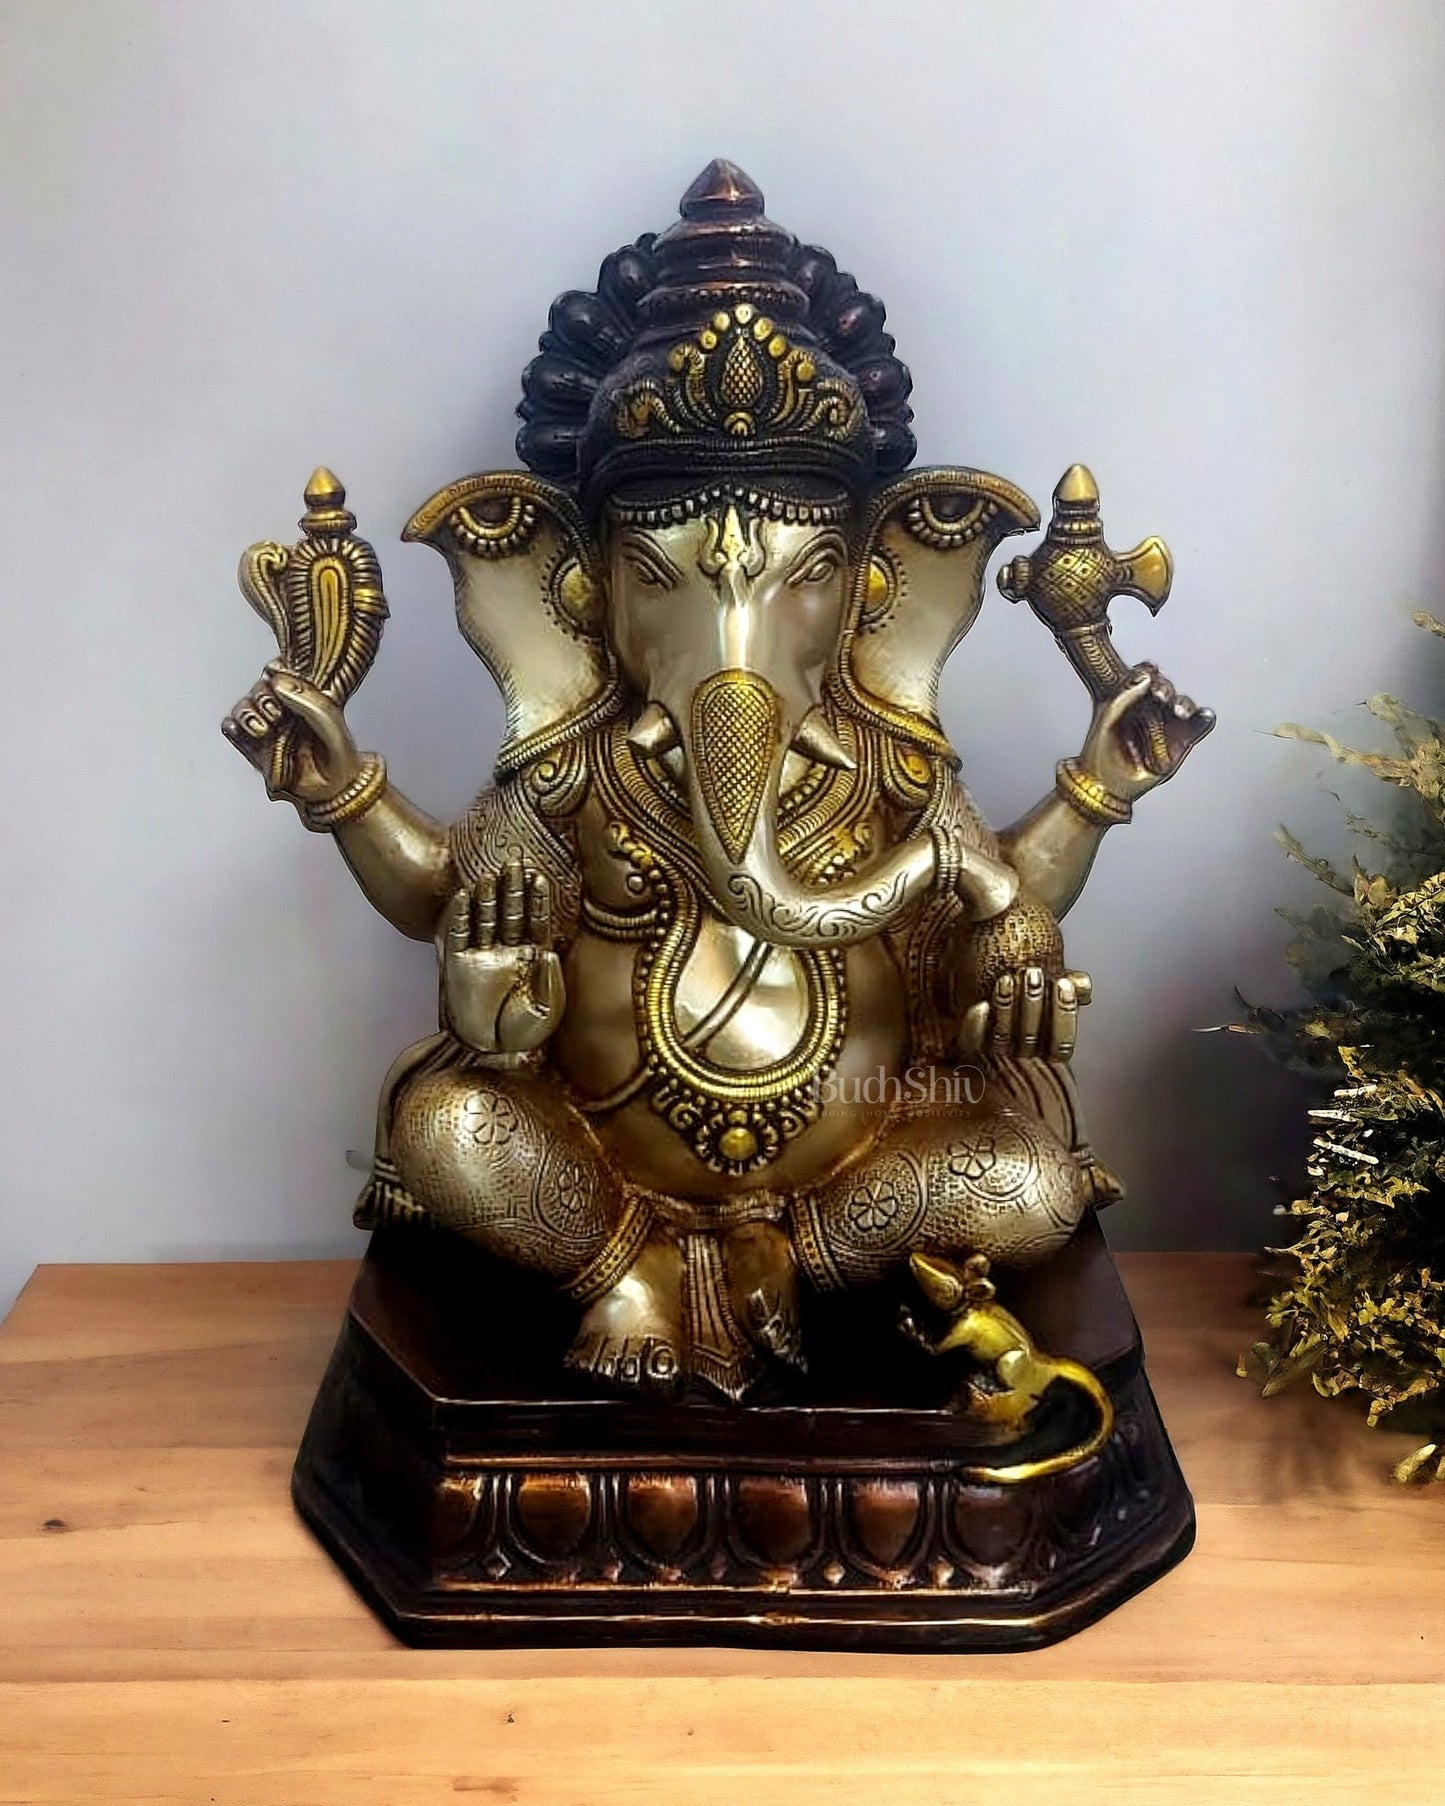 Unique Handcrafted Ganesha Statue 14 inch - Budhshiv.com